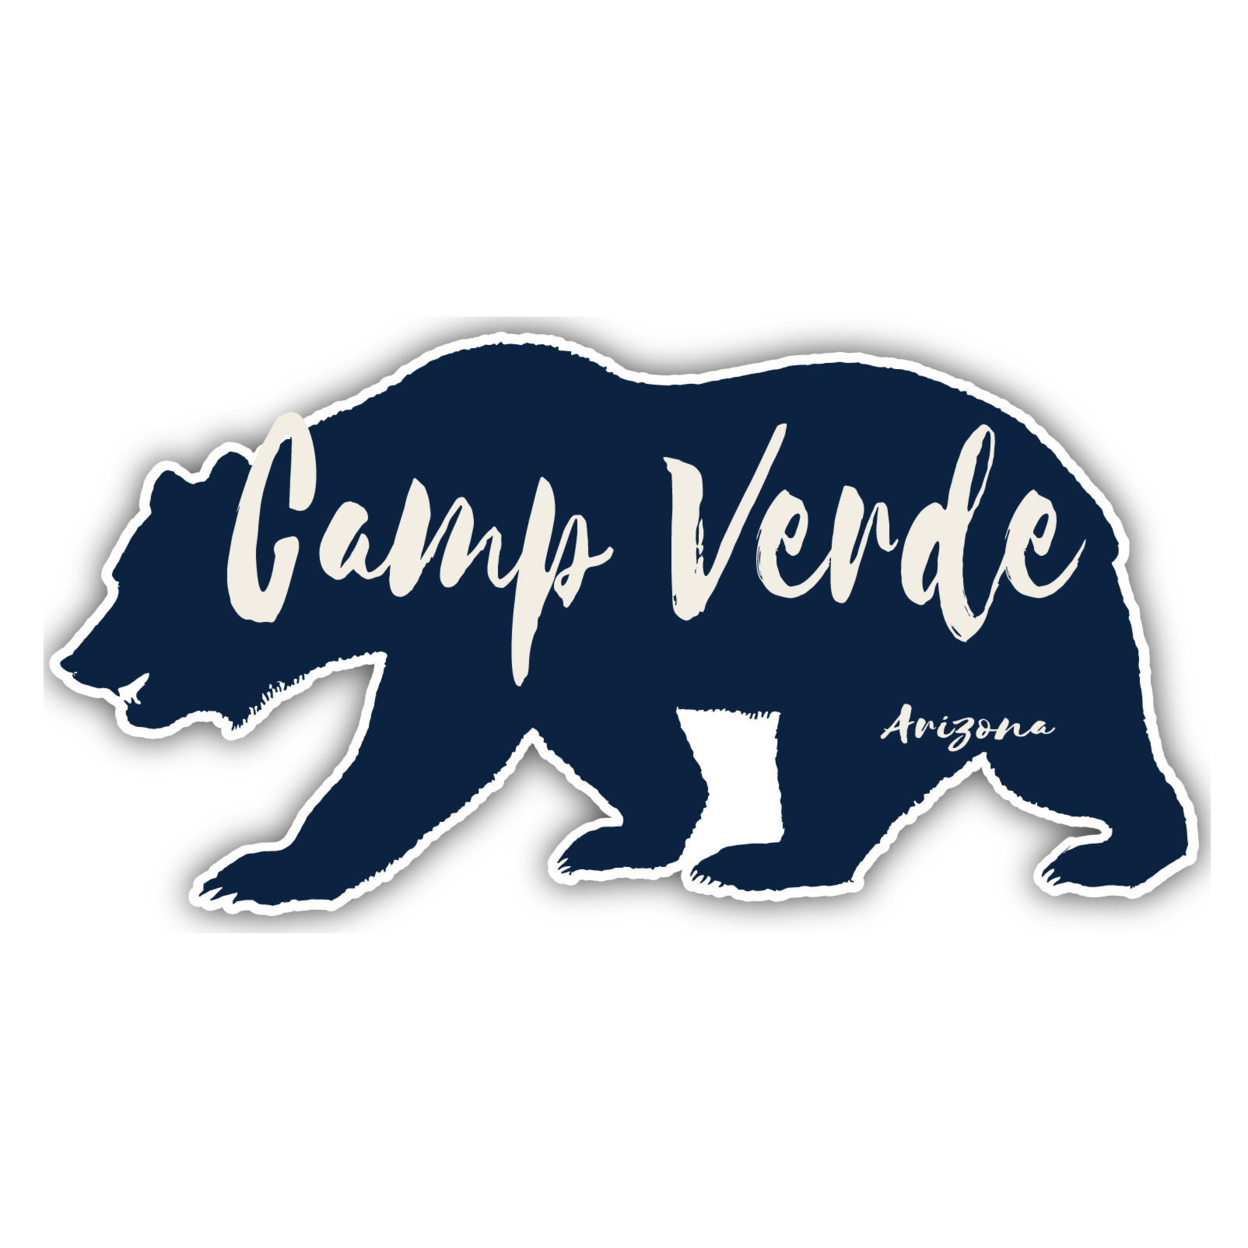 Camp Verde Arizona Souvenir Decorative Stickers (Choose Theme And Size) - 4-Pack, 12-Inch, Camp Life